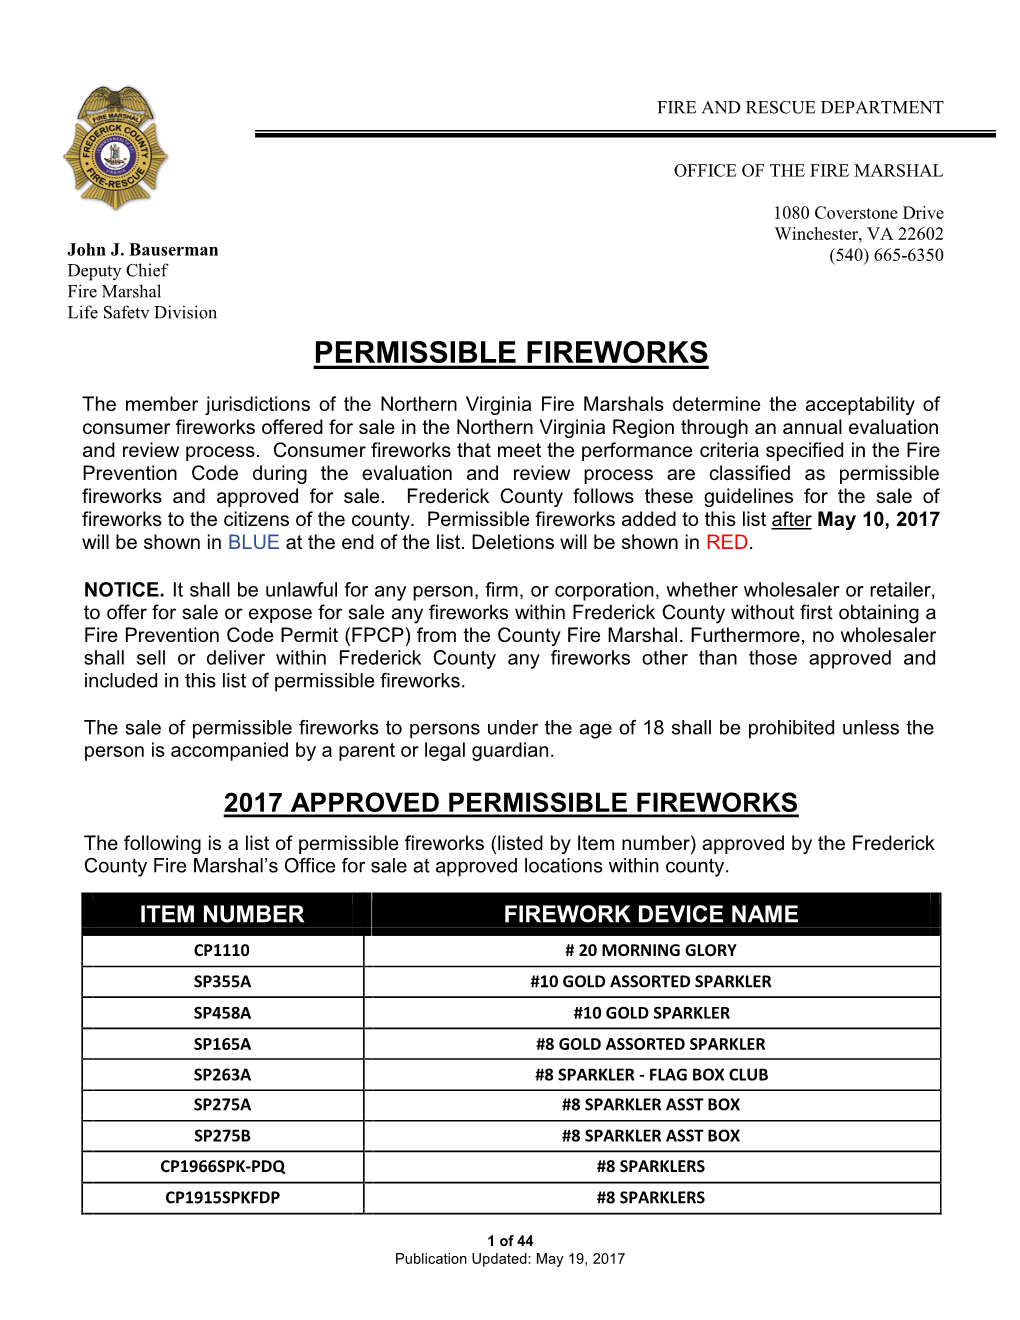 Permissible Fireworks